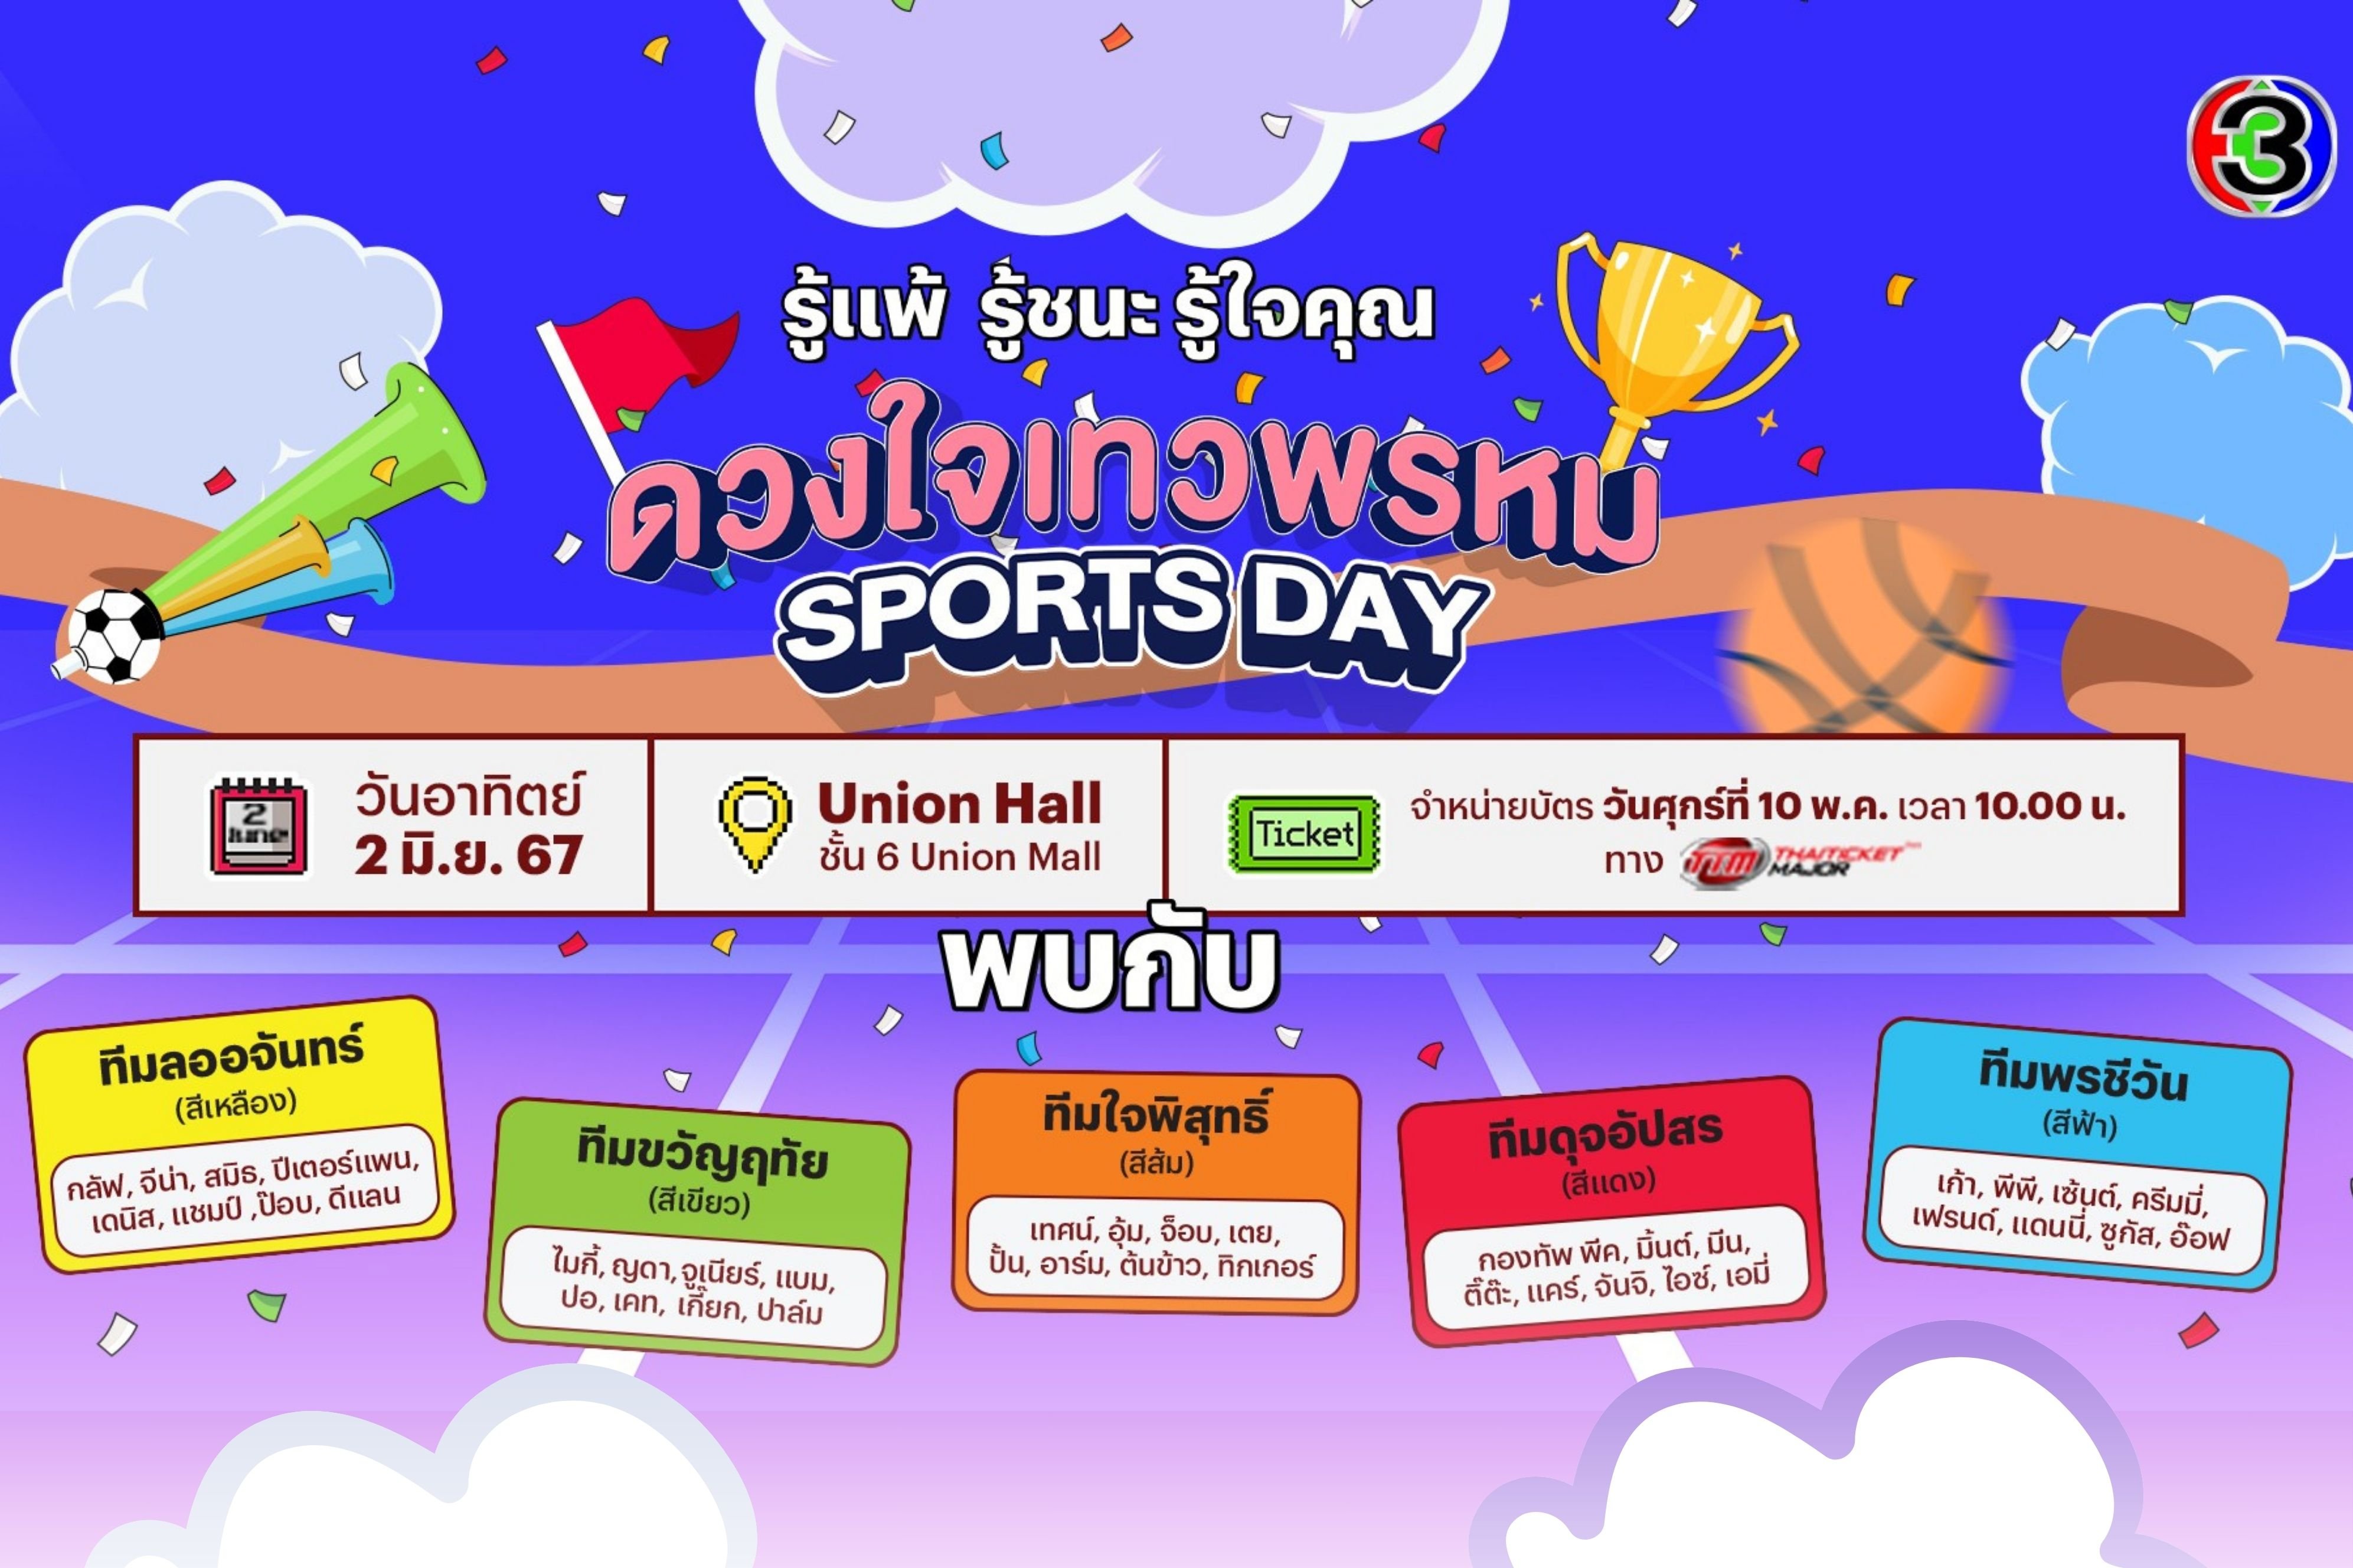 Sport Activities for "Duangjai Devaprom” Fans